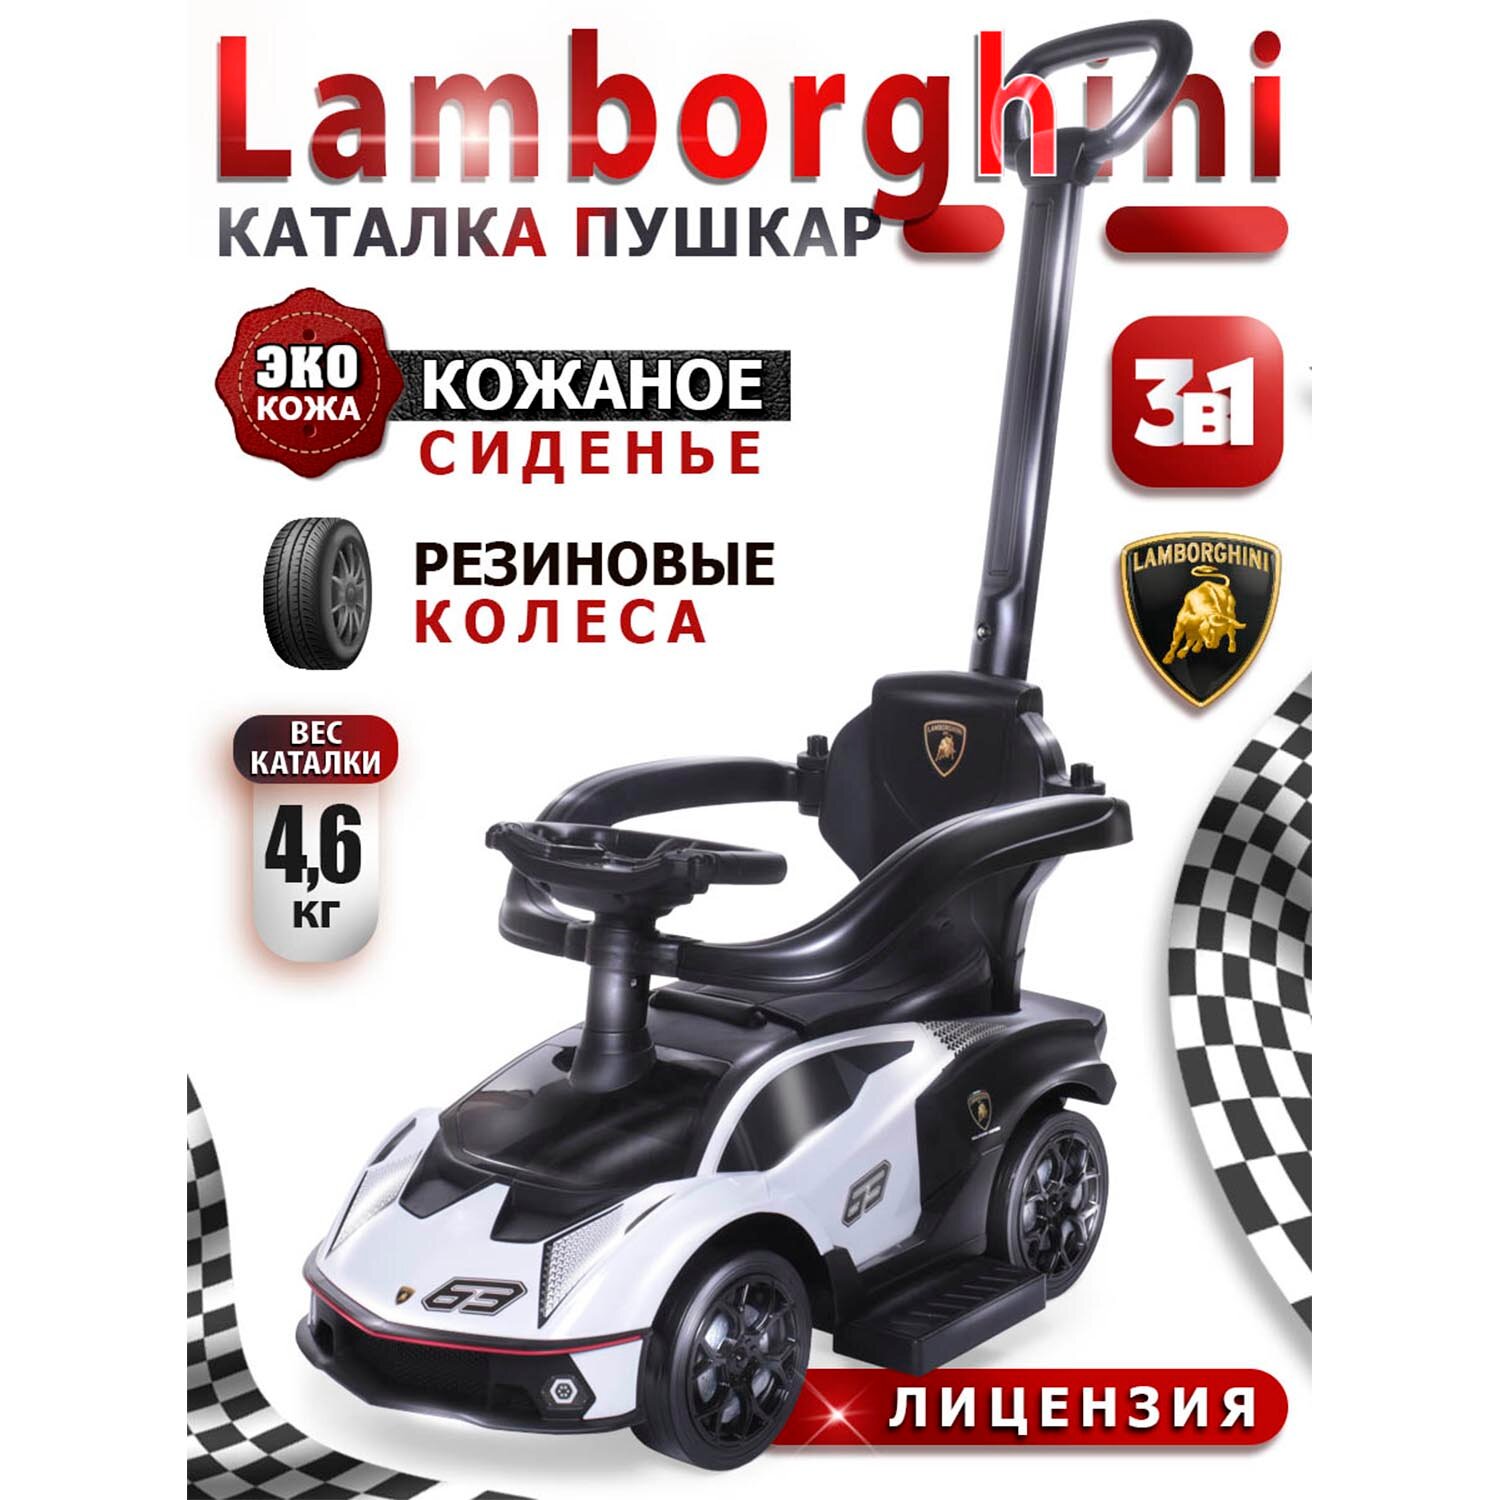 Babycare - Lamborghini      , 